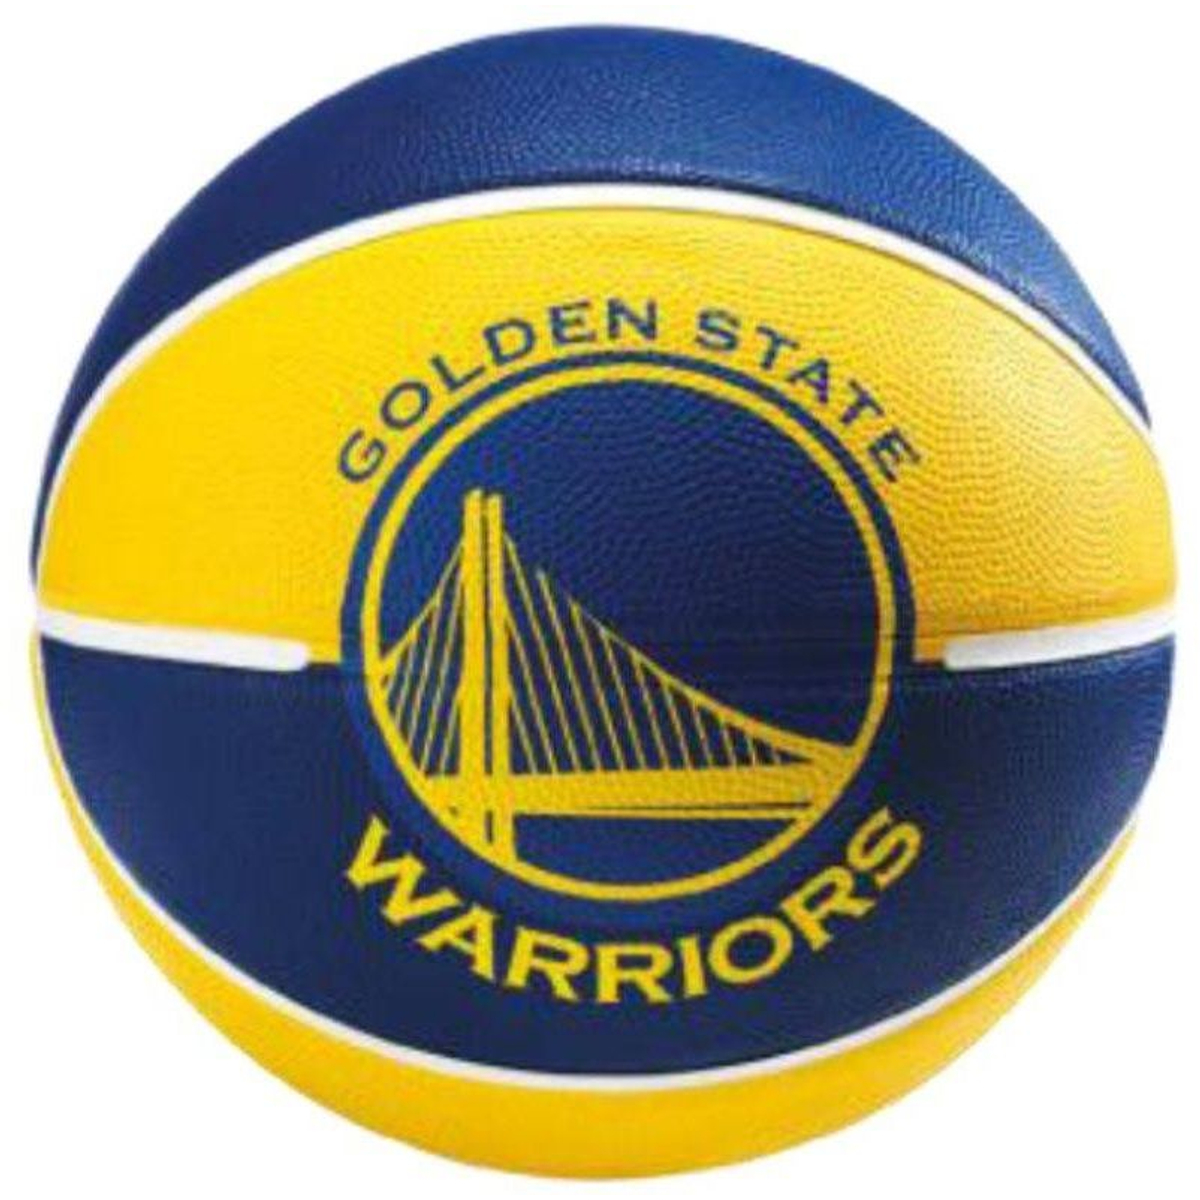 Spalding NBA Golden State Warriors Basketbal